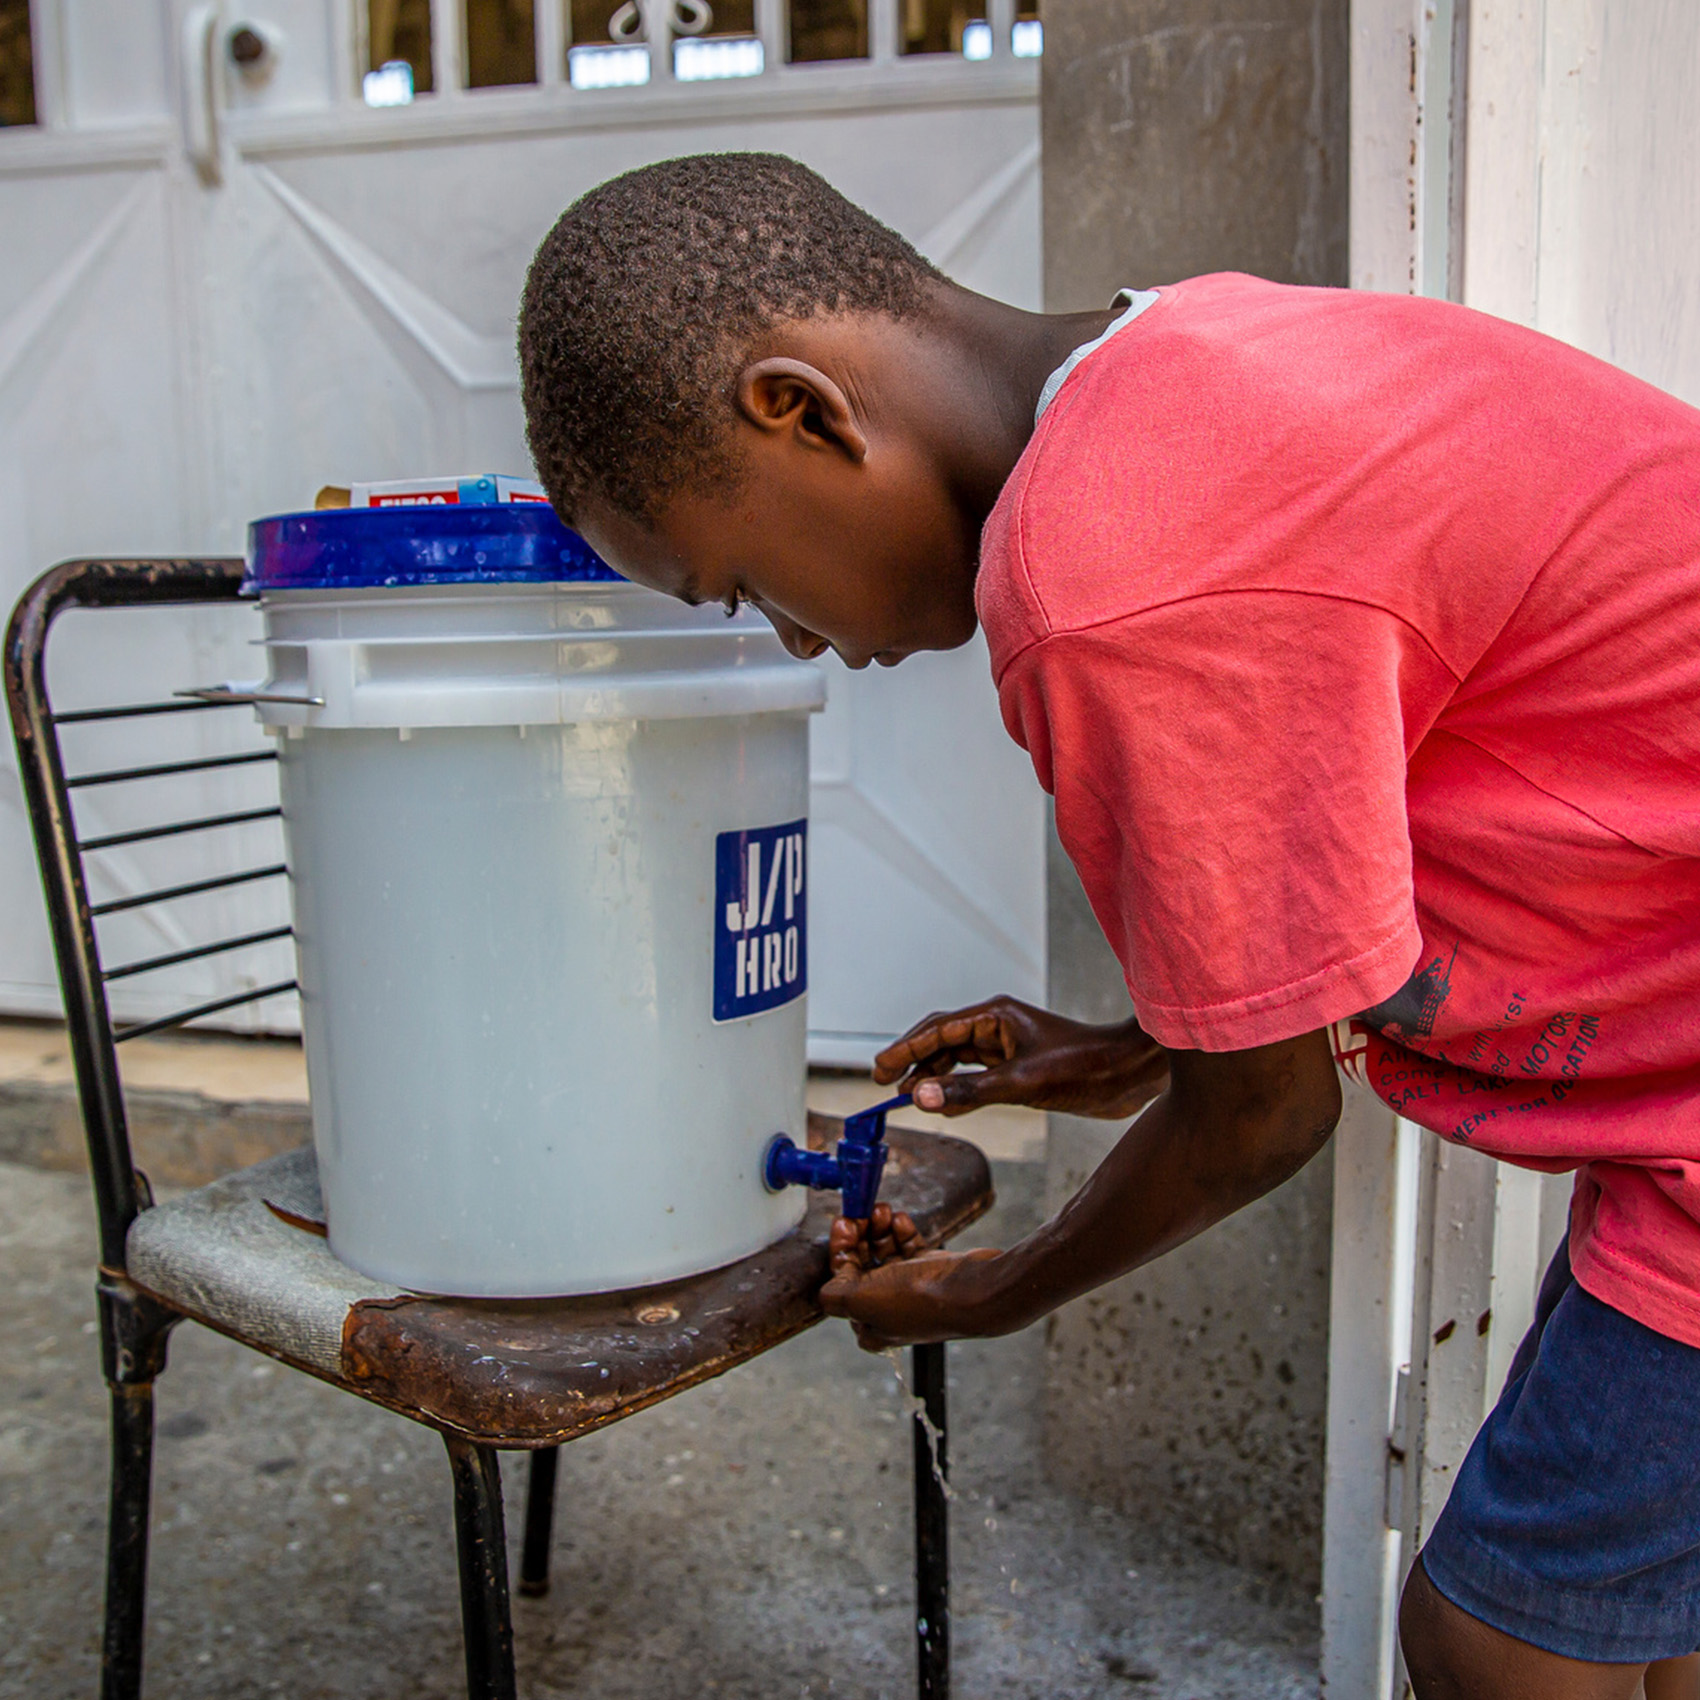 GHESKIO in Haiti prepares for COVID-19